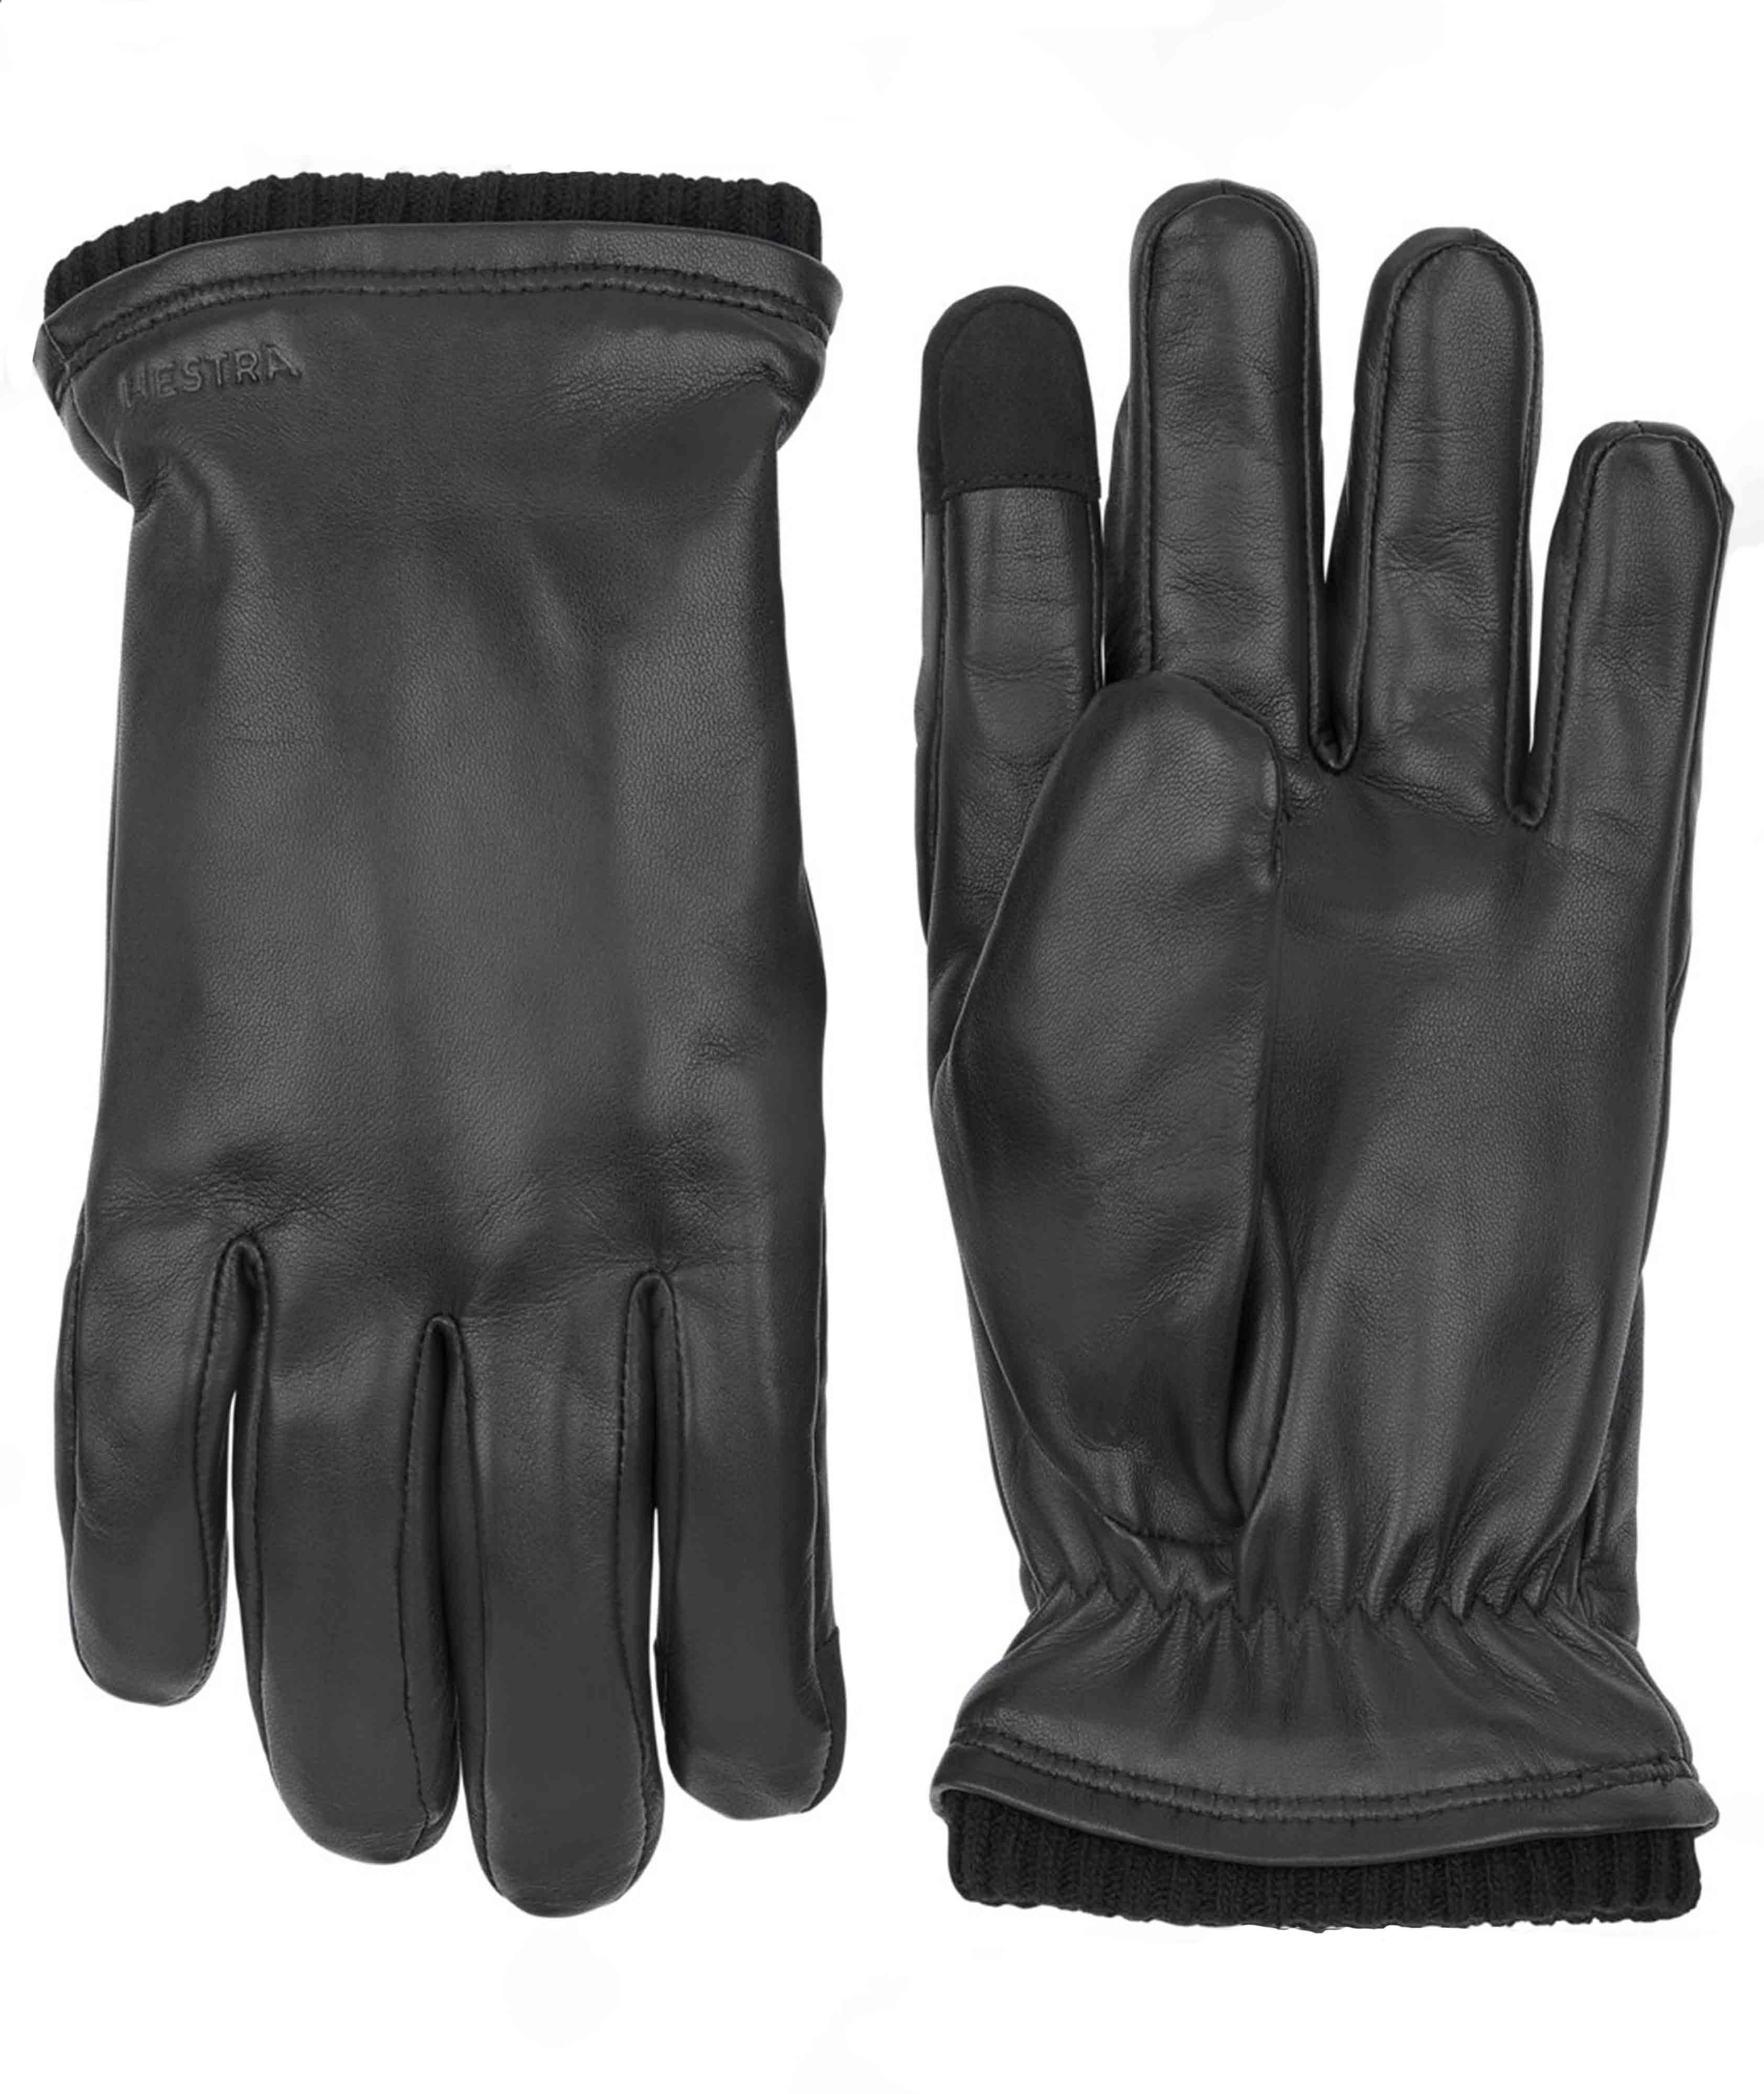 John Touchscreen-Compatible Hairsheep Gloves image 0